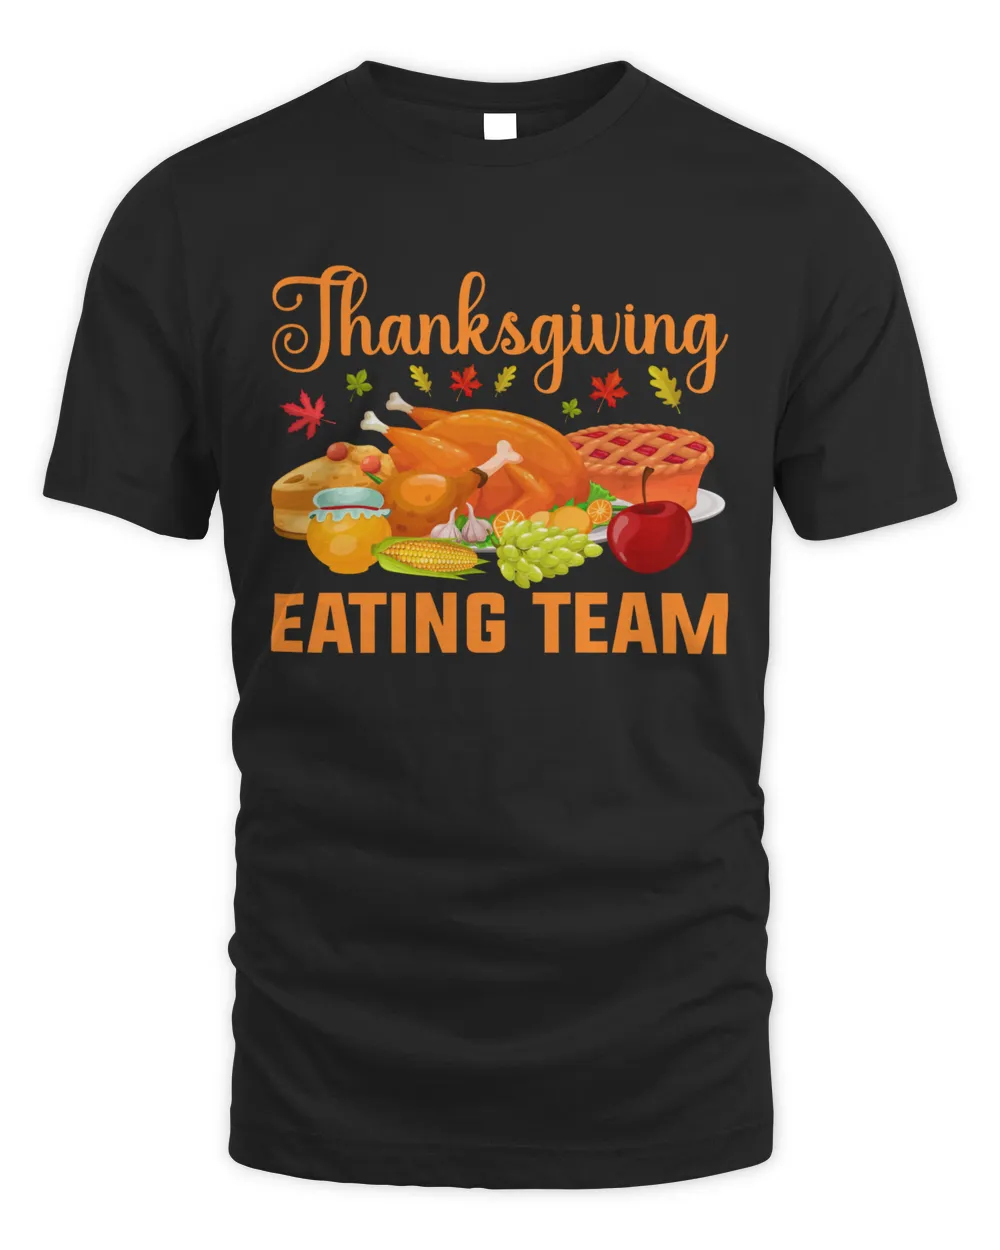 Thanksgiving eating team